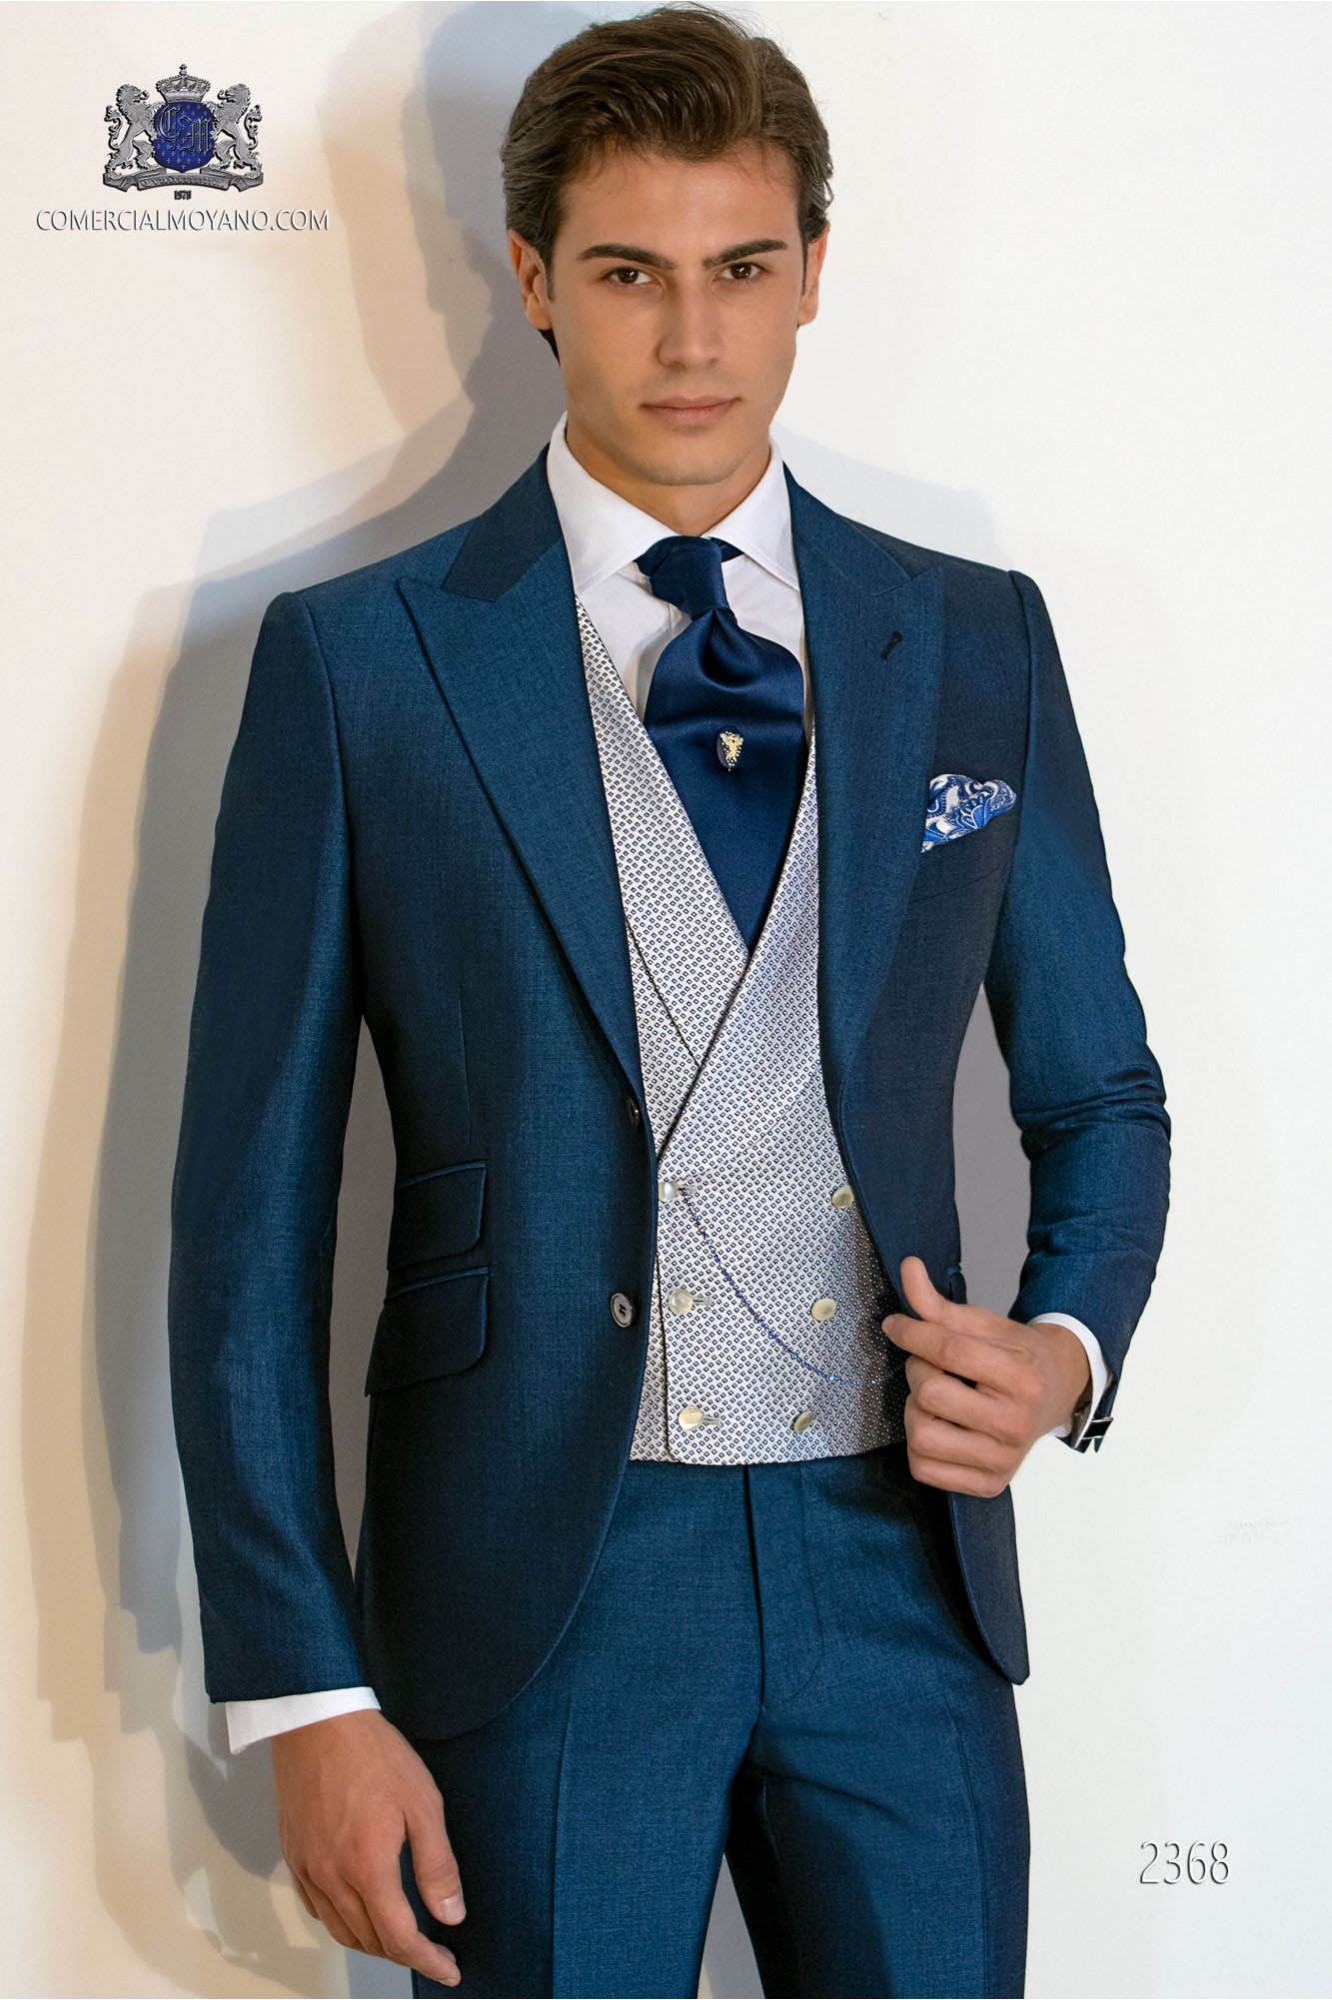 Tailored blue suit model 2368 Mario Moyano